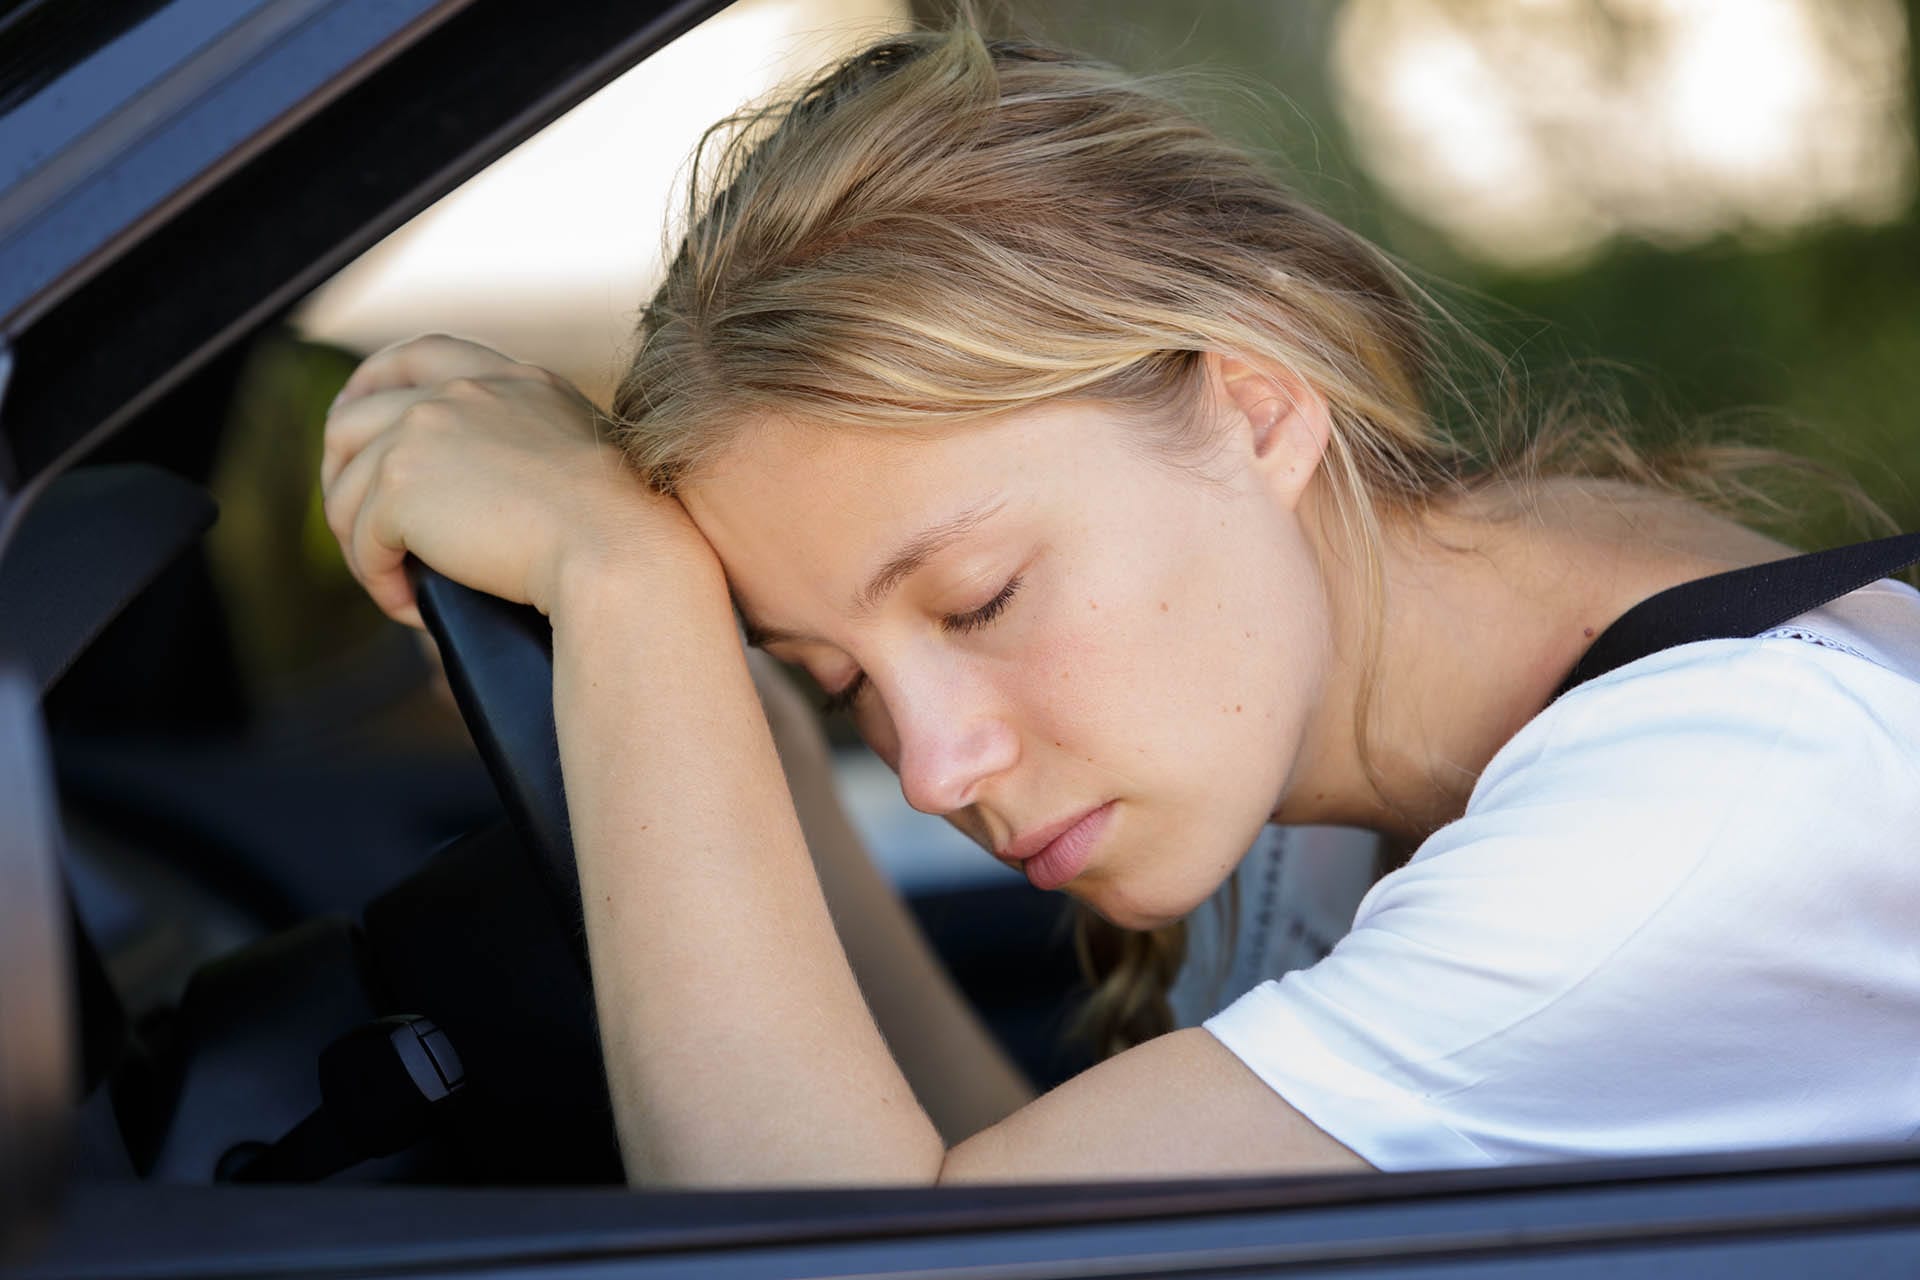 Tired woman asleep in her car due to sleep apnea